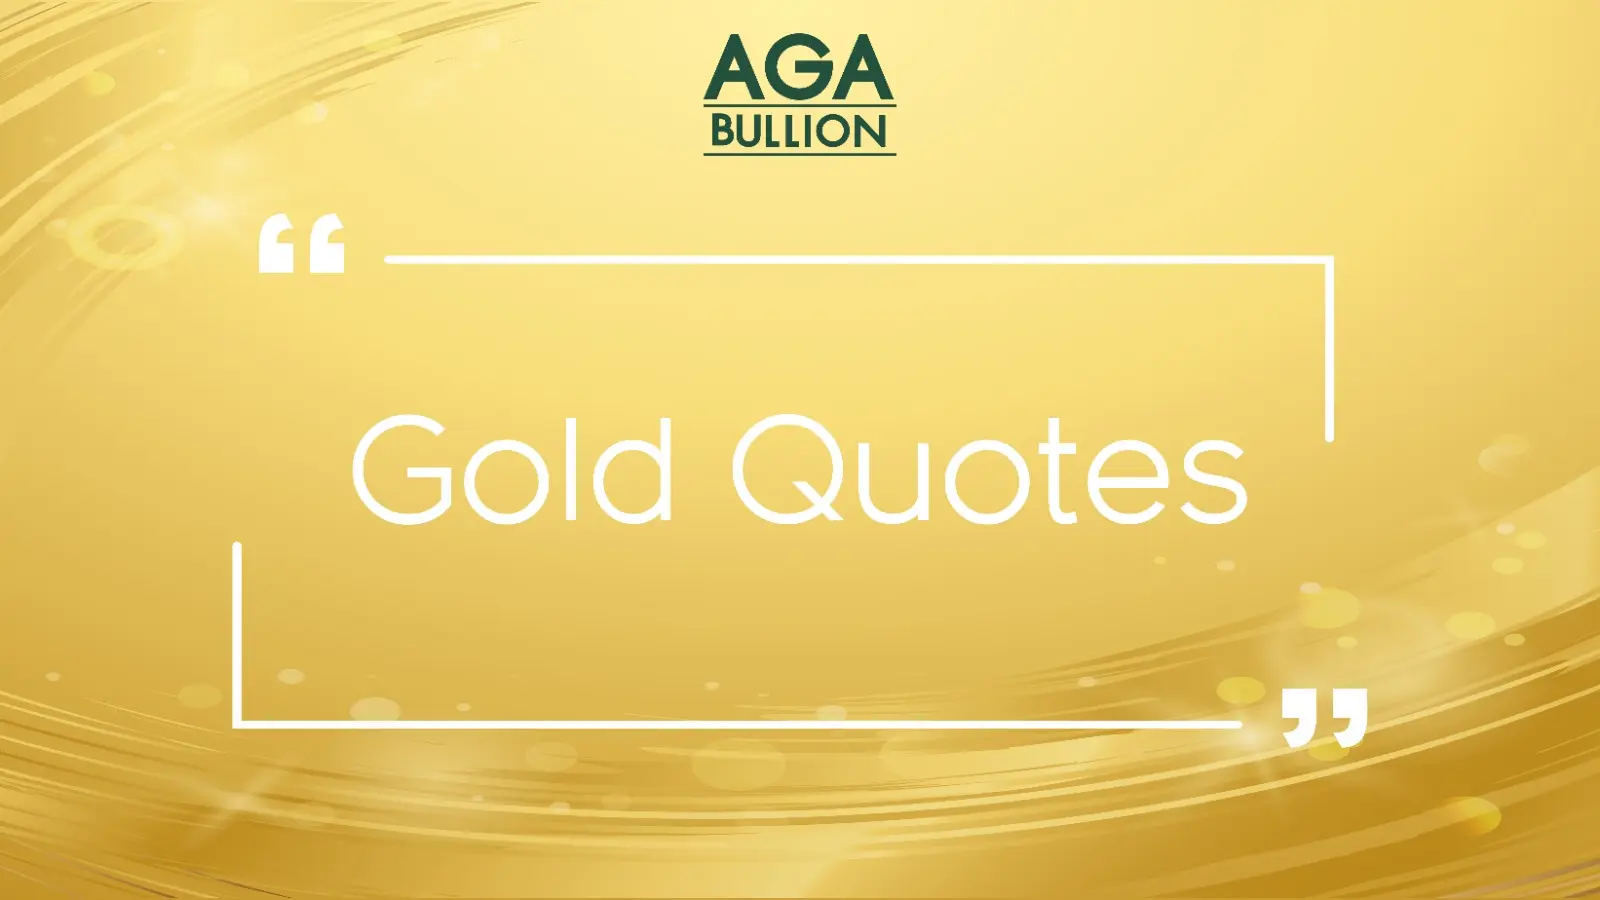 Golden quotes